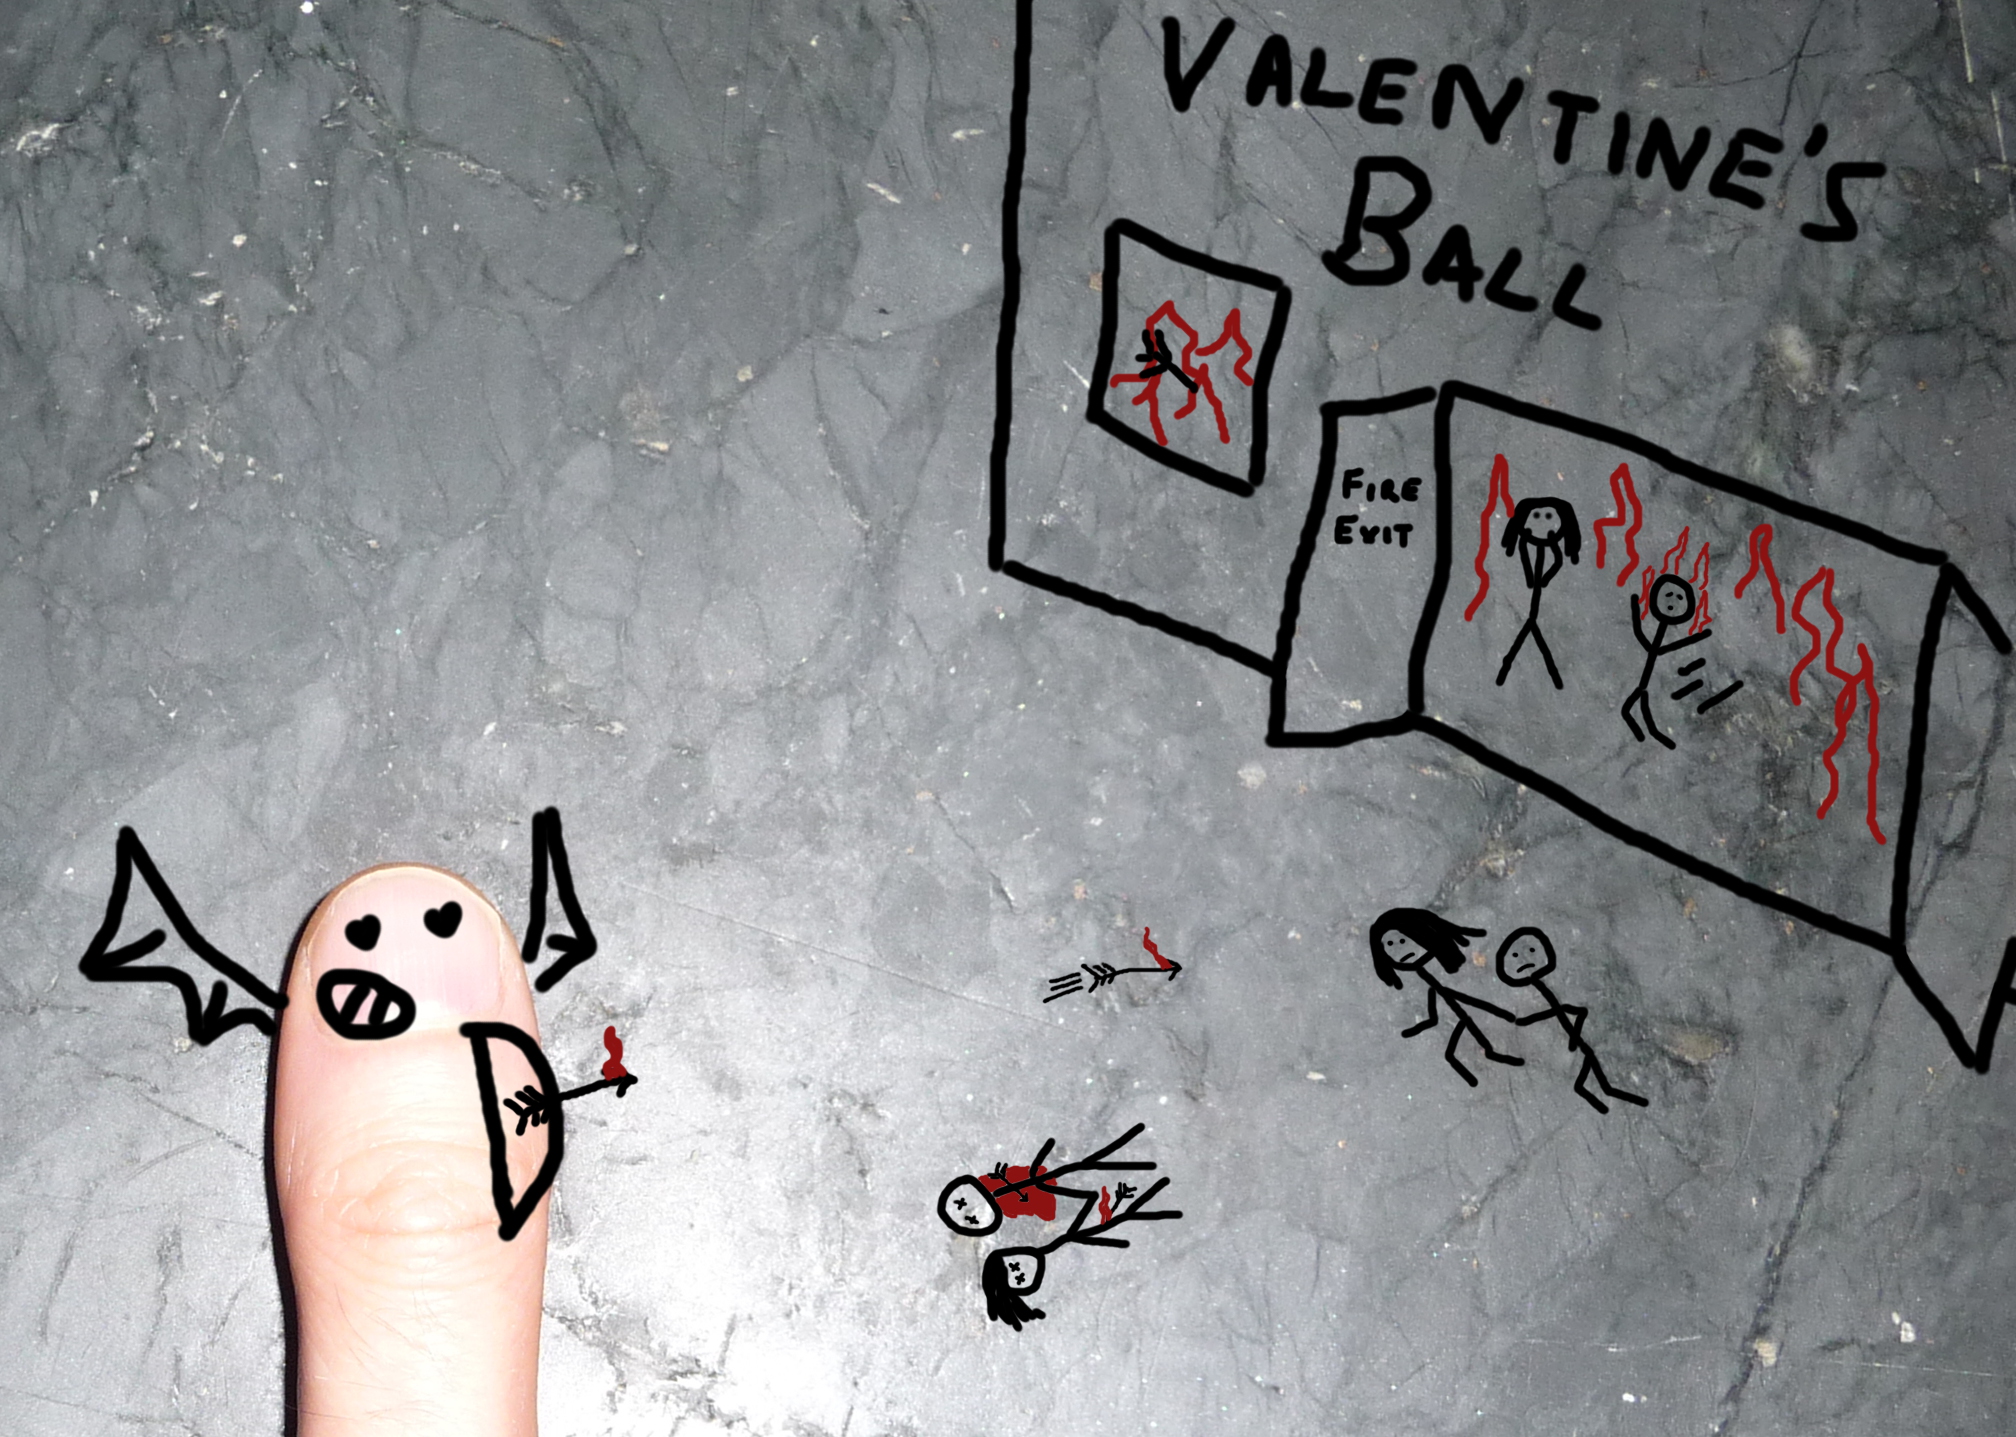 Evil Thumb Cupid - Valentine's Day 2014